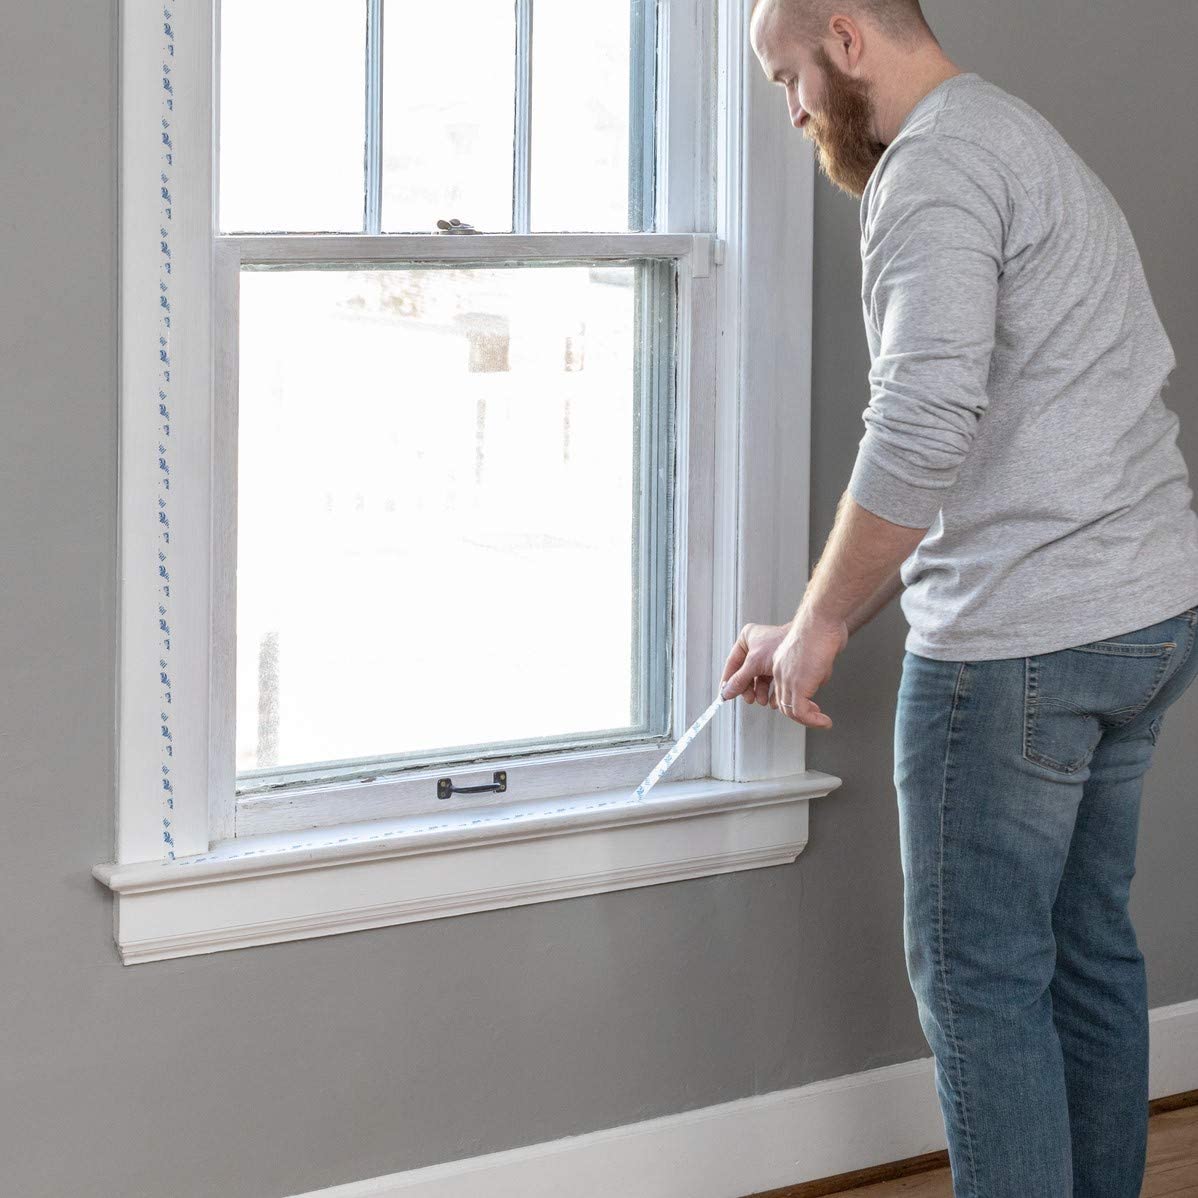 Amazon winterize your rental applying window insulation film.jpg